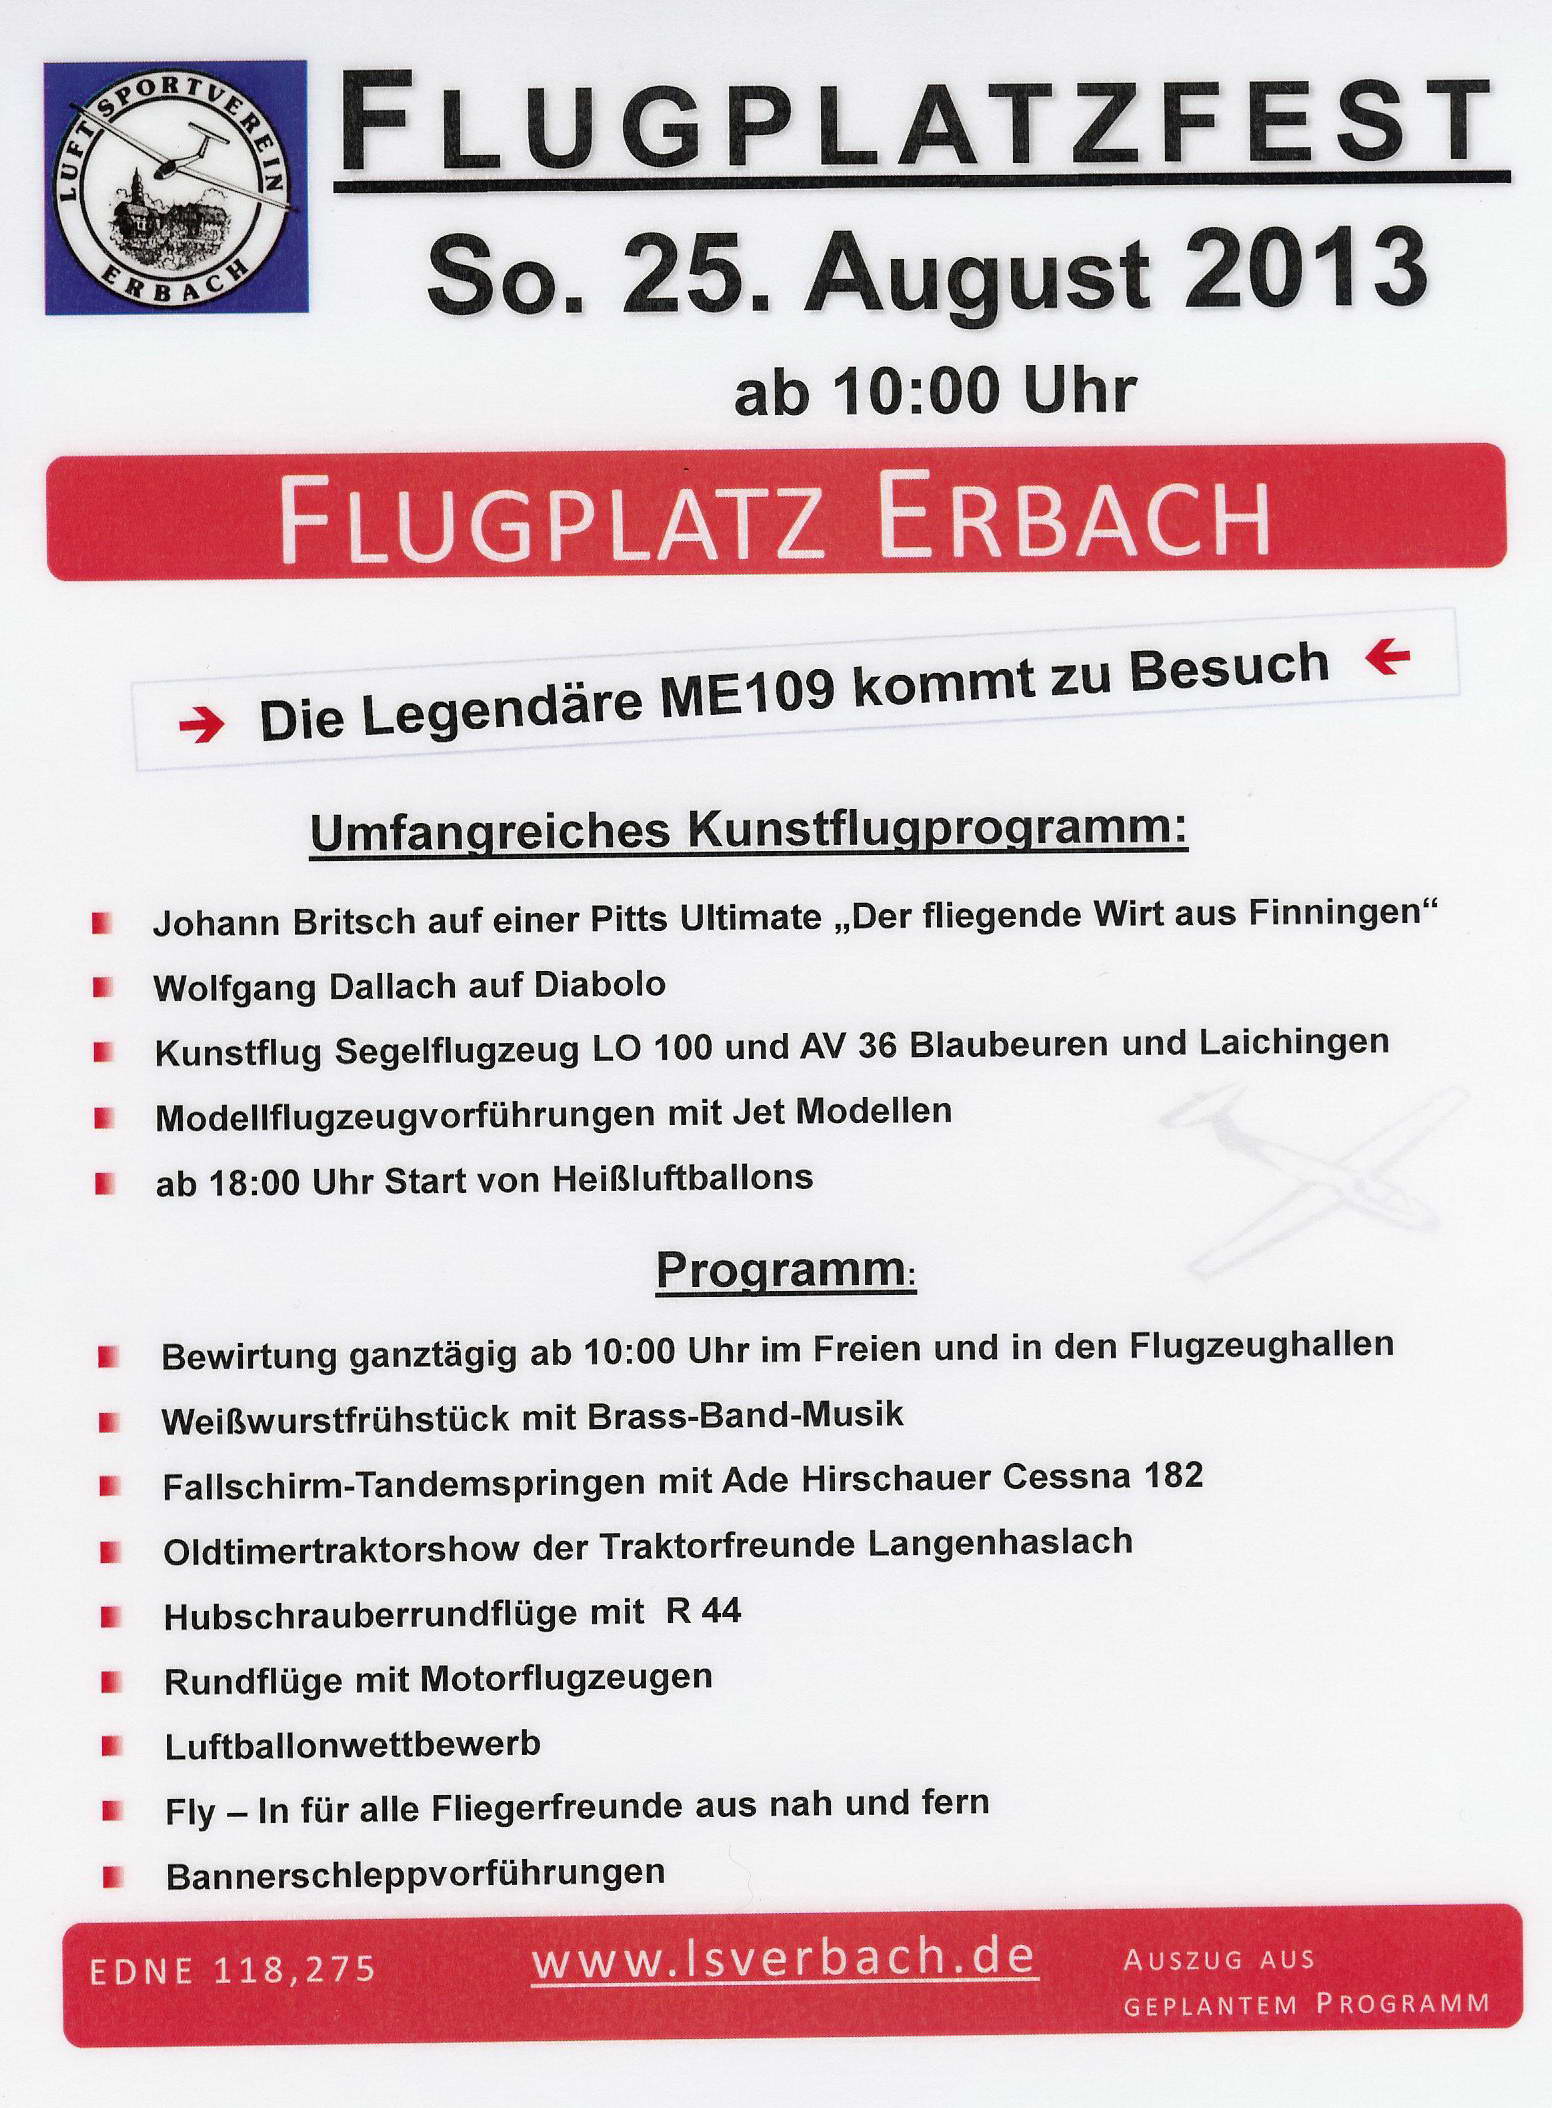 Flugplatzfest Luftsportverein Erbach e.V. 2013